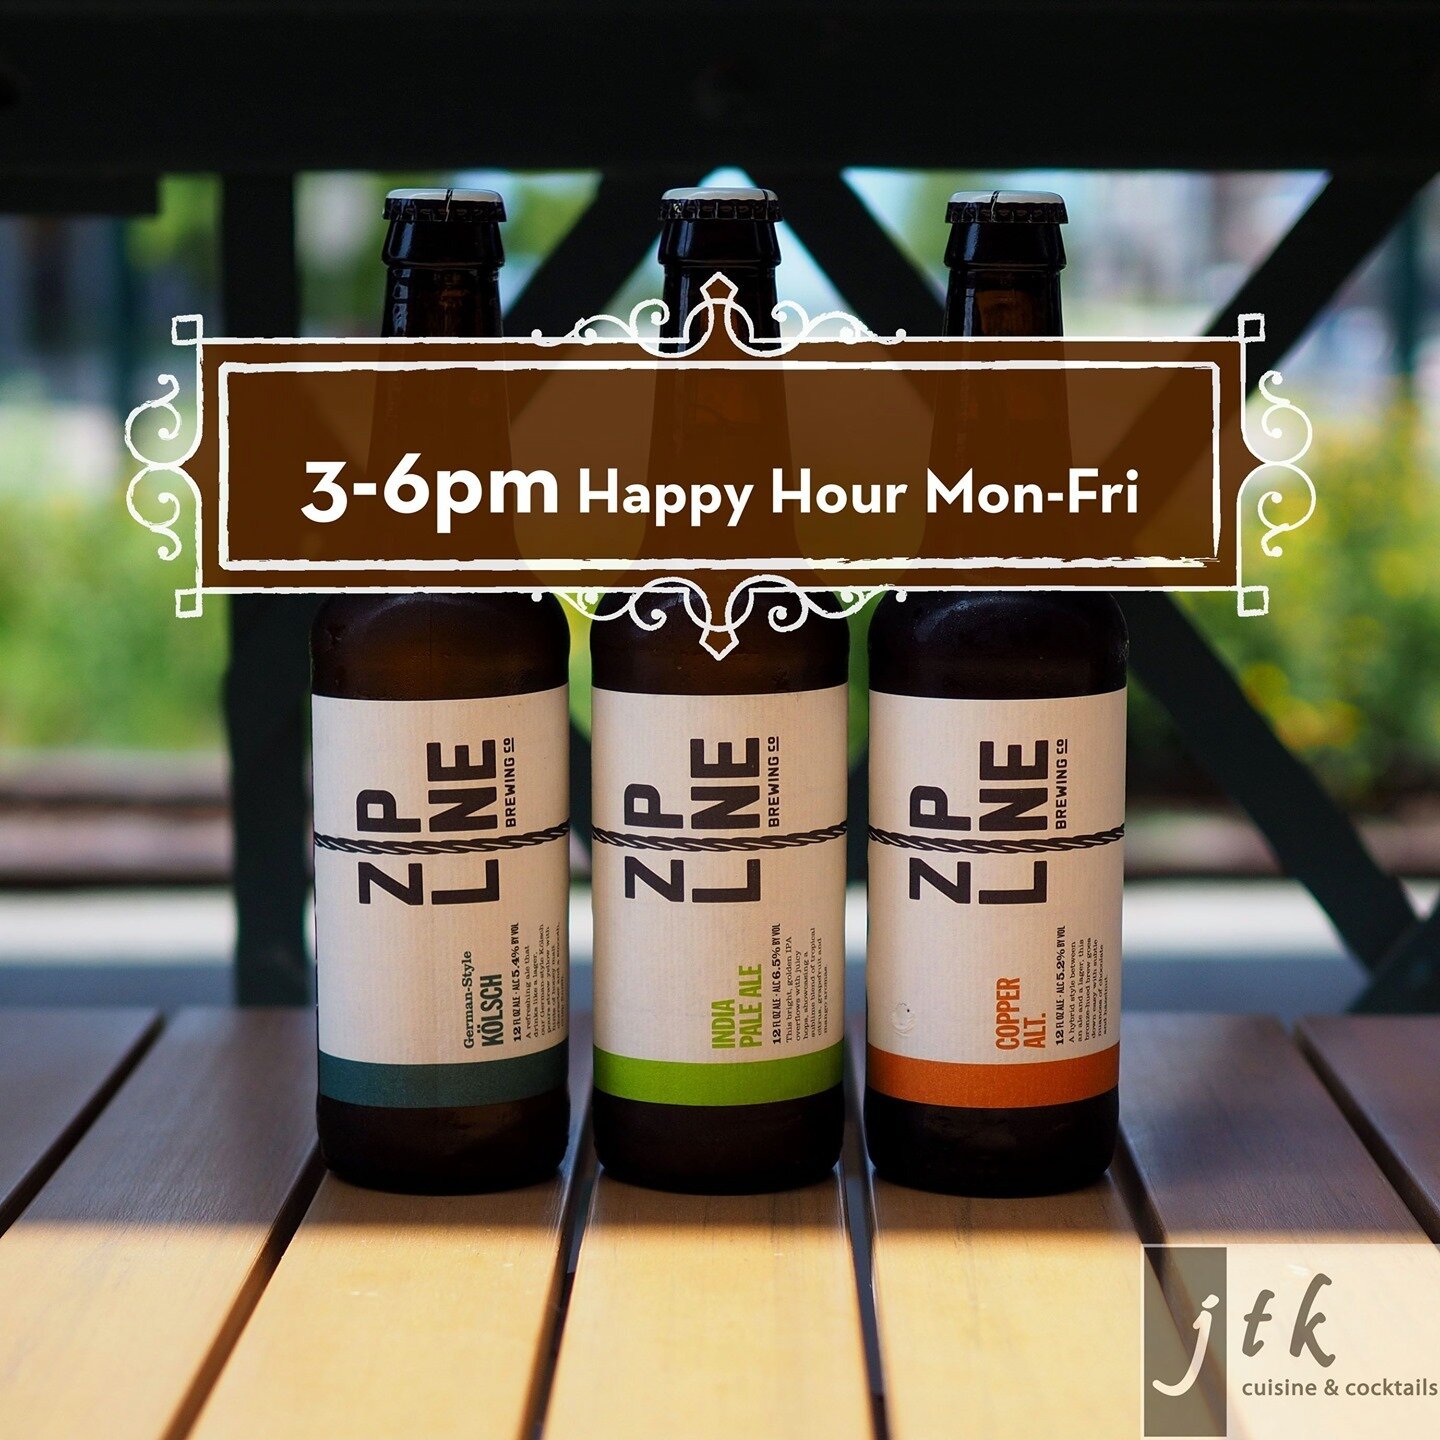 We've got Happy Hour until 6pm! Here's to the end of another work week! 🍻 ⠀
⠀
#jtklnk #downtownlincoln #mylnk #lincolnhaymarket #restaurant #beer #craftbeer #ziplinebeer #happyhour